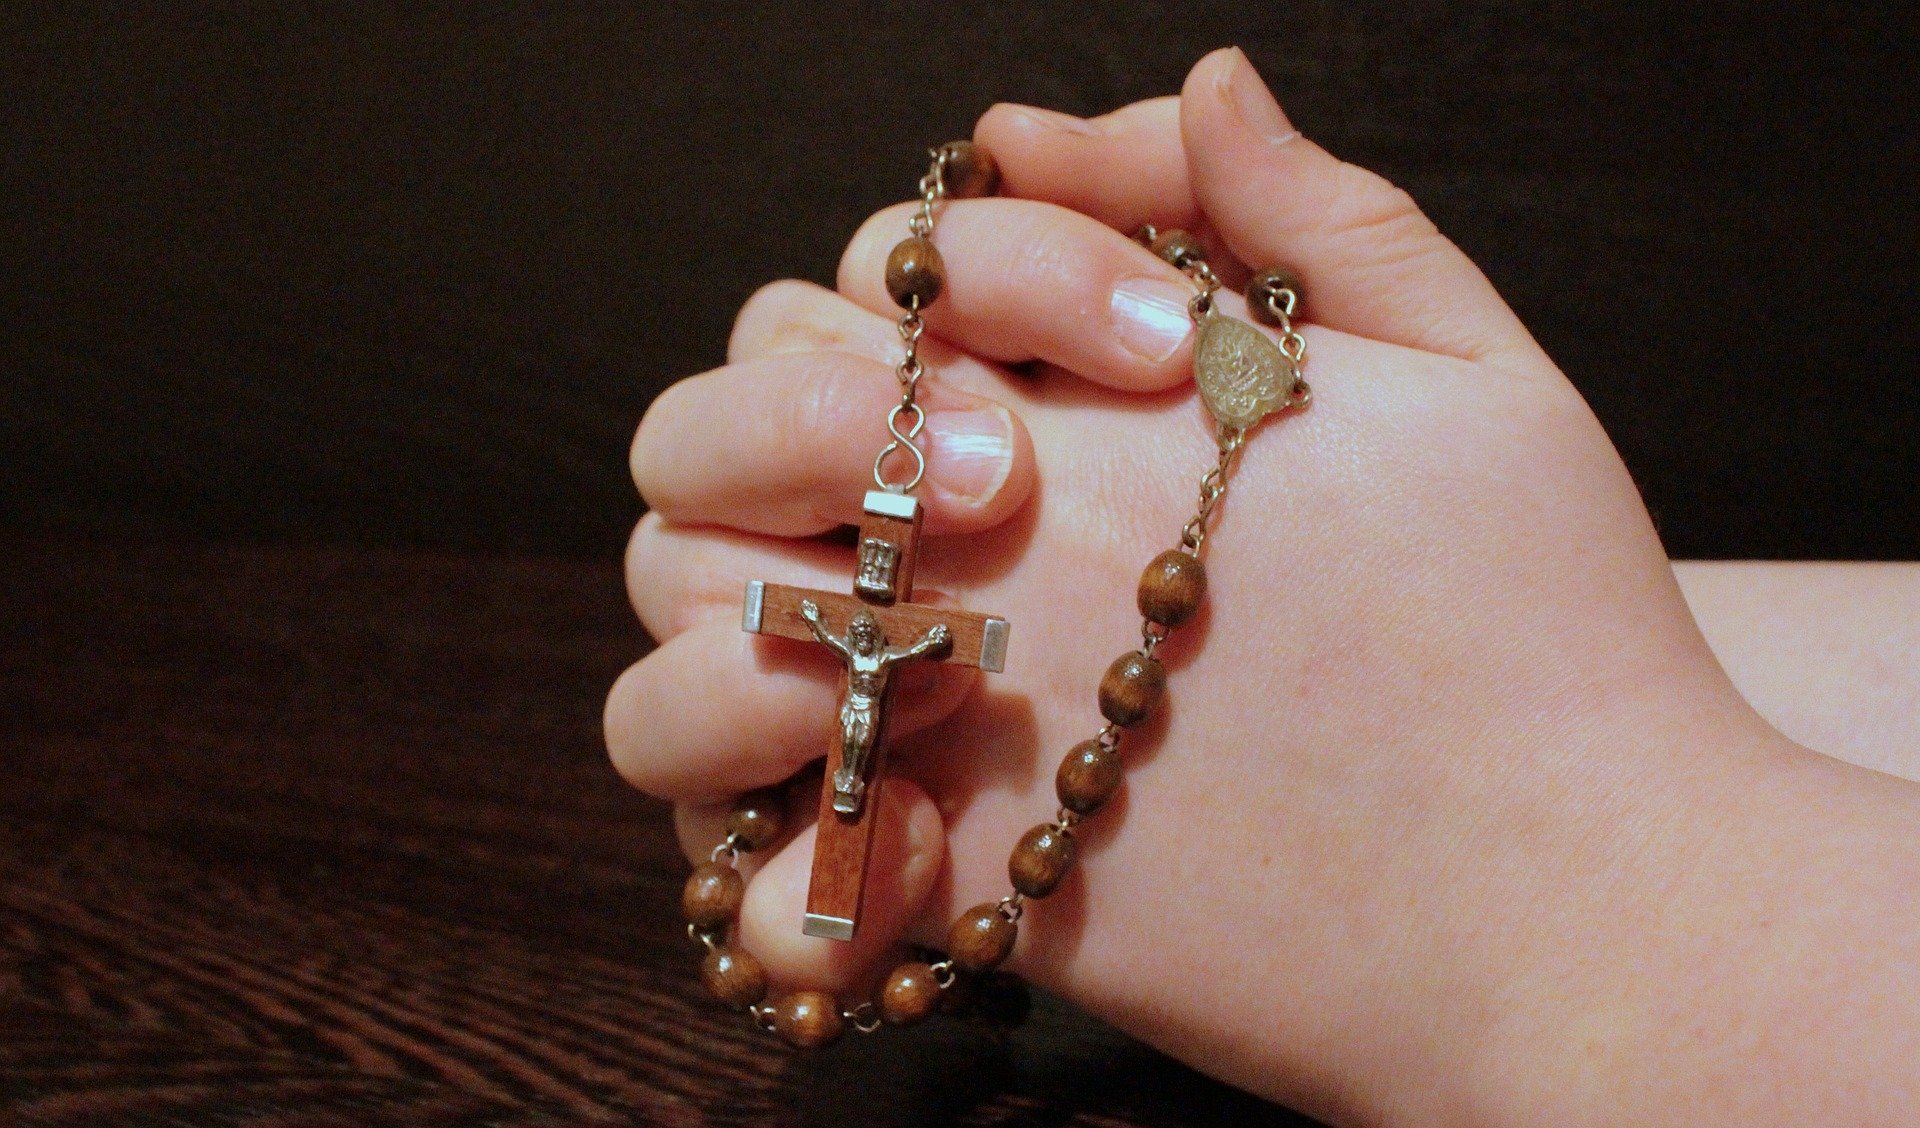 rosary-gbea616f76_1920 (c) www.pixabay.com